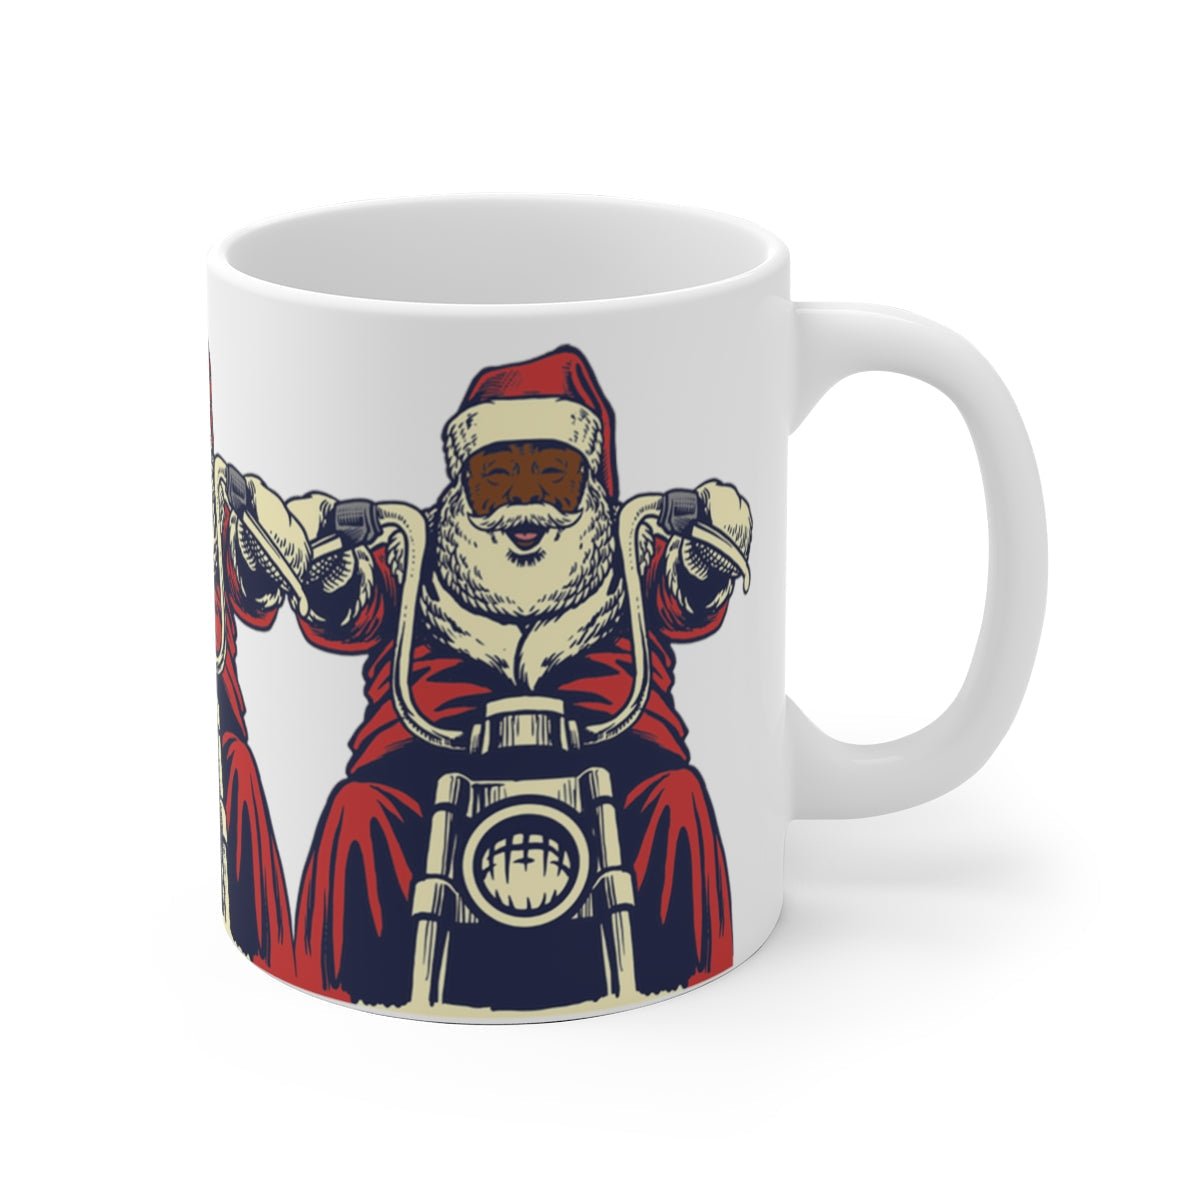 Santa Motorcycle Mug - The Trini Gee